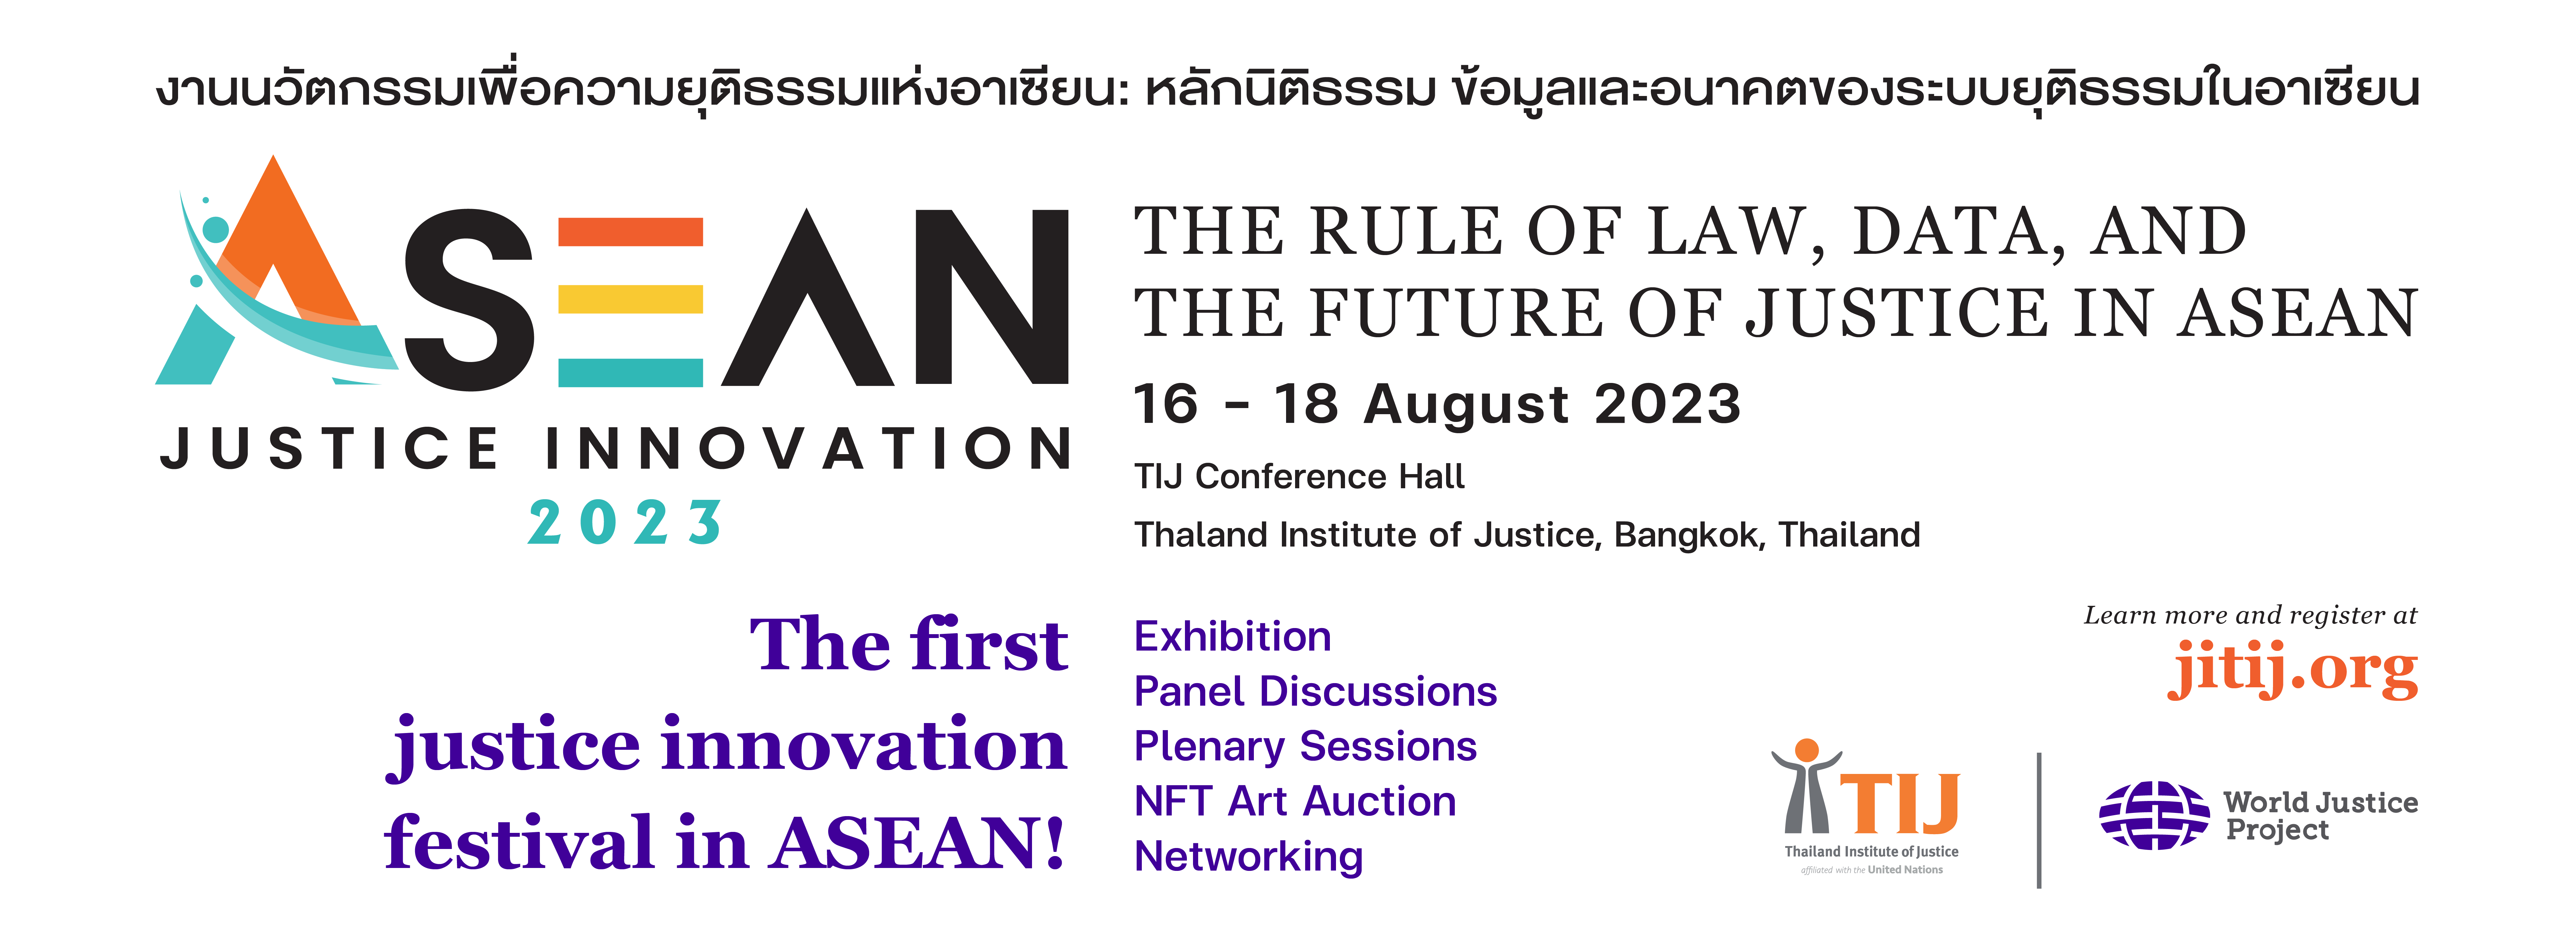 https://tijpublicforum.org/en/asean-justice-innovation-2023/